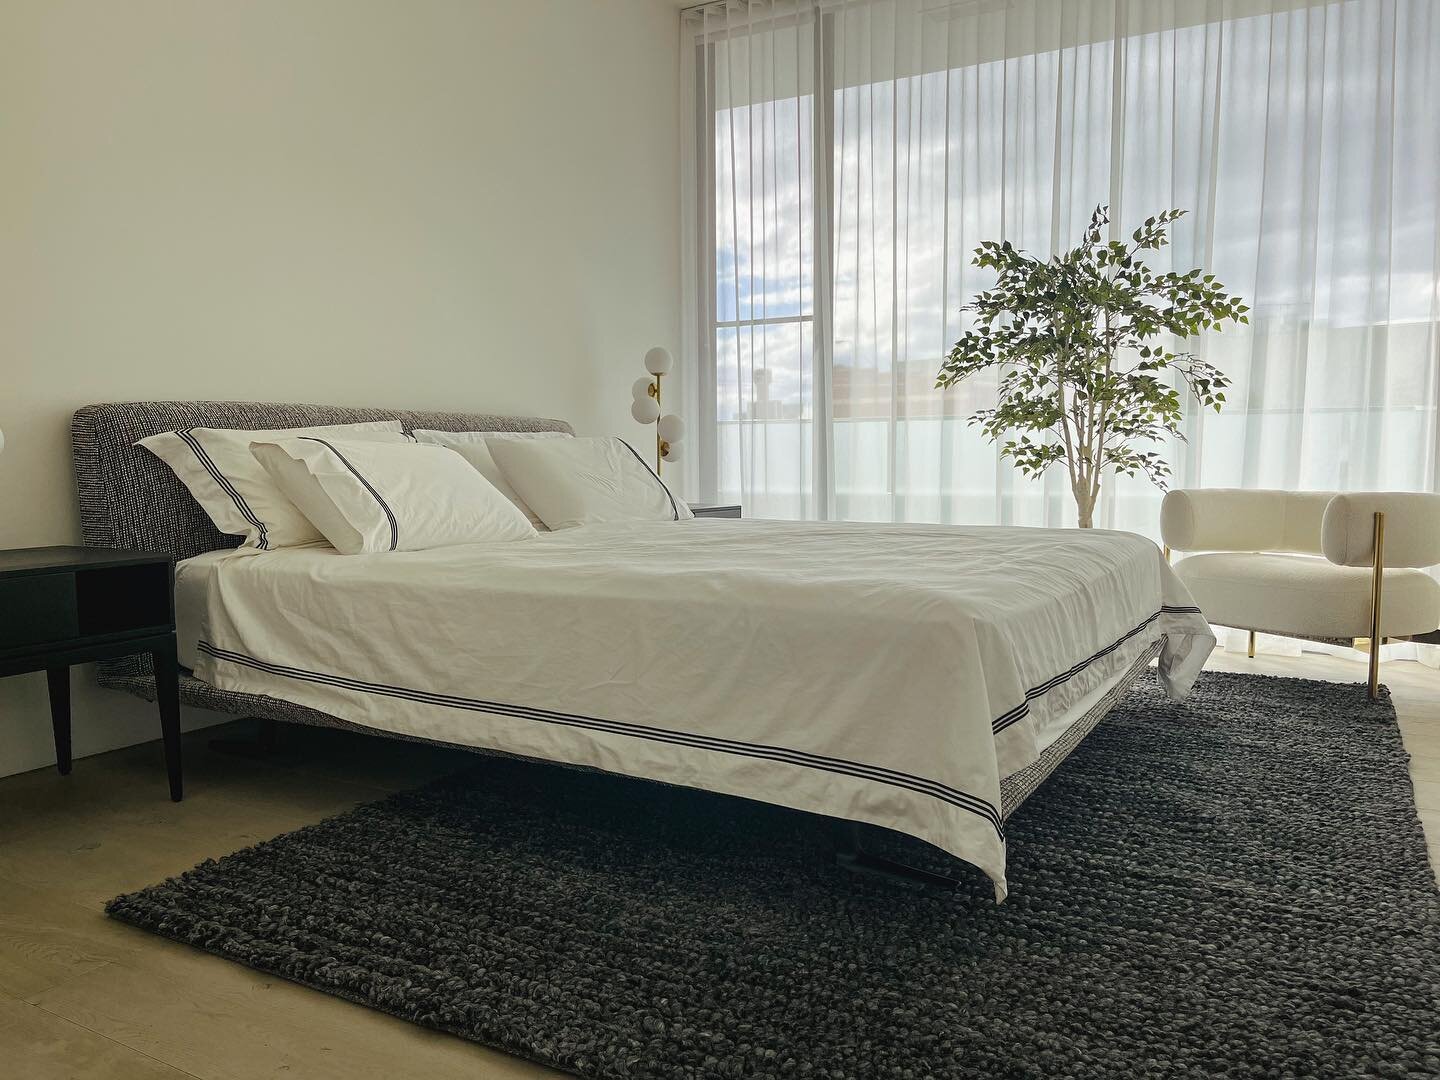 A minimalistic design to accompany the Wanaker Furtex rug in dark grey 🌿

#wool  #interiorstyling #interiorinspiration #melbourneinteriordesign #architecturedesign #inspiration #newbedroom#homeselections